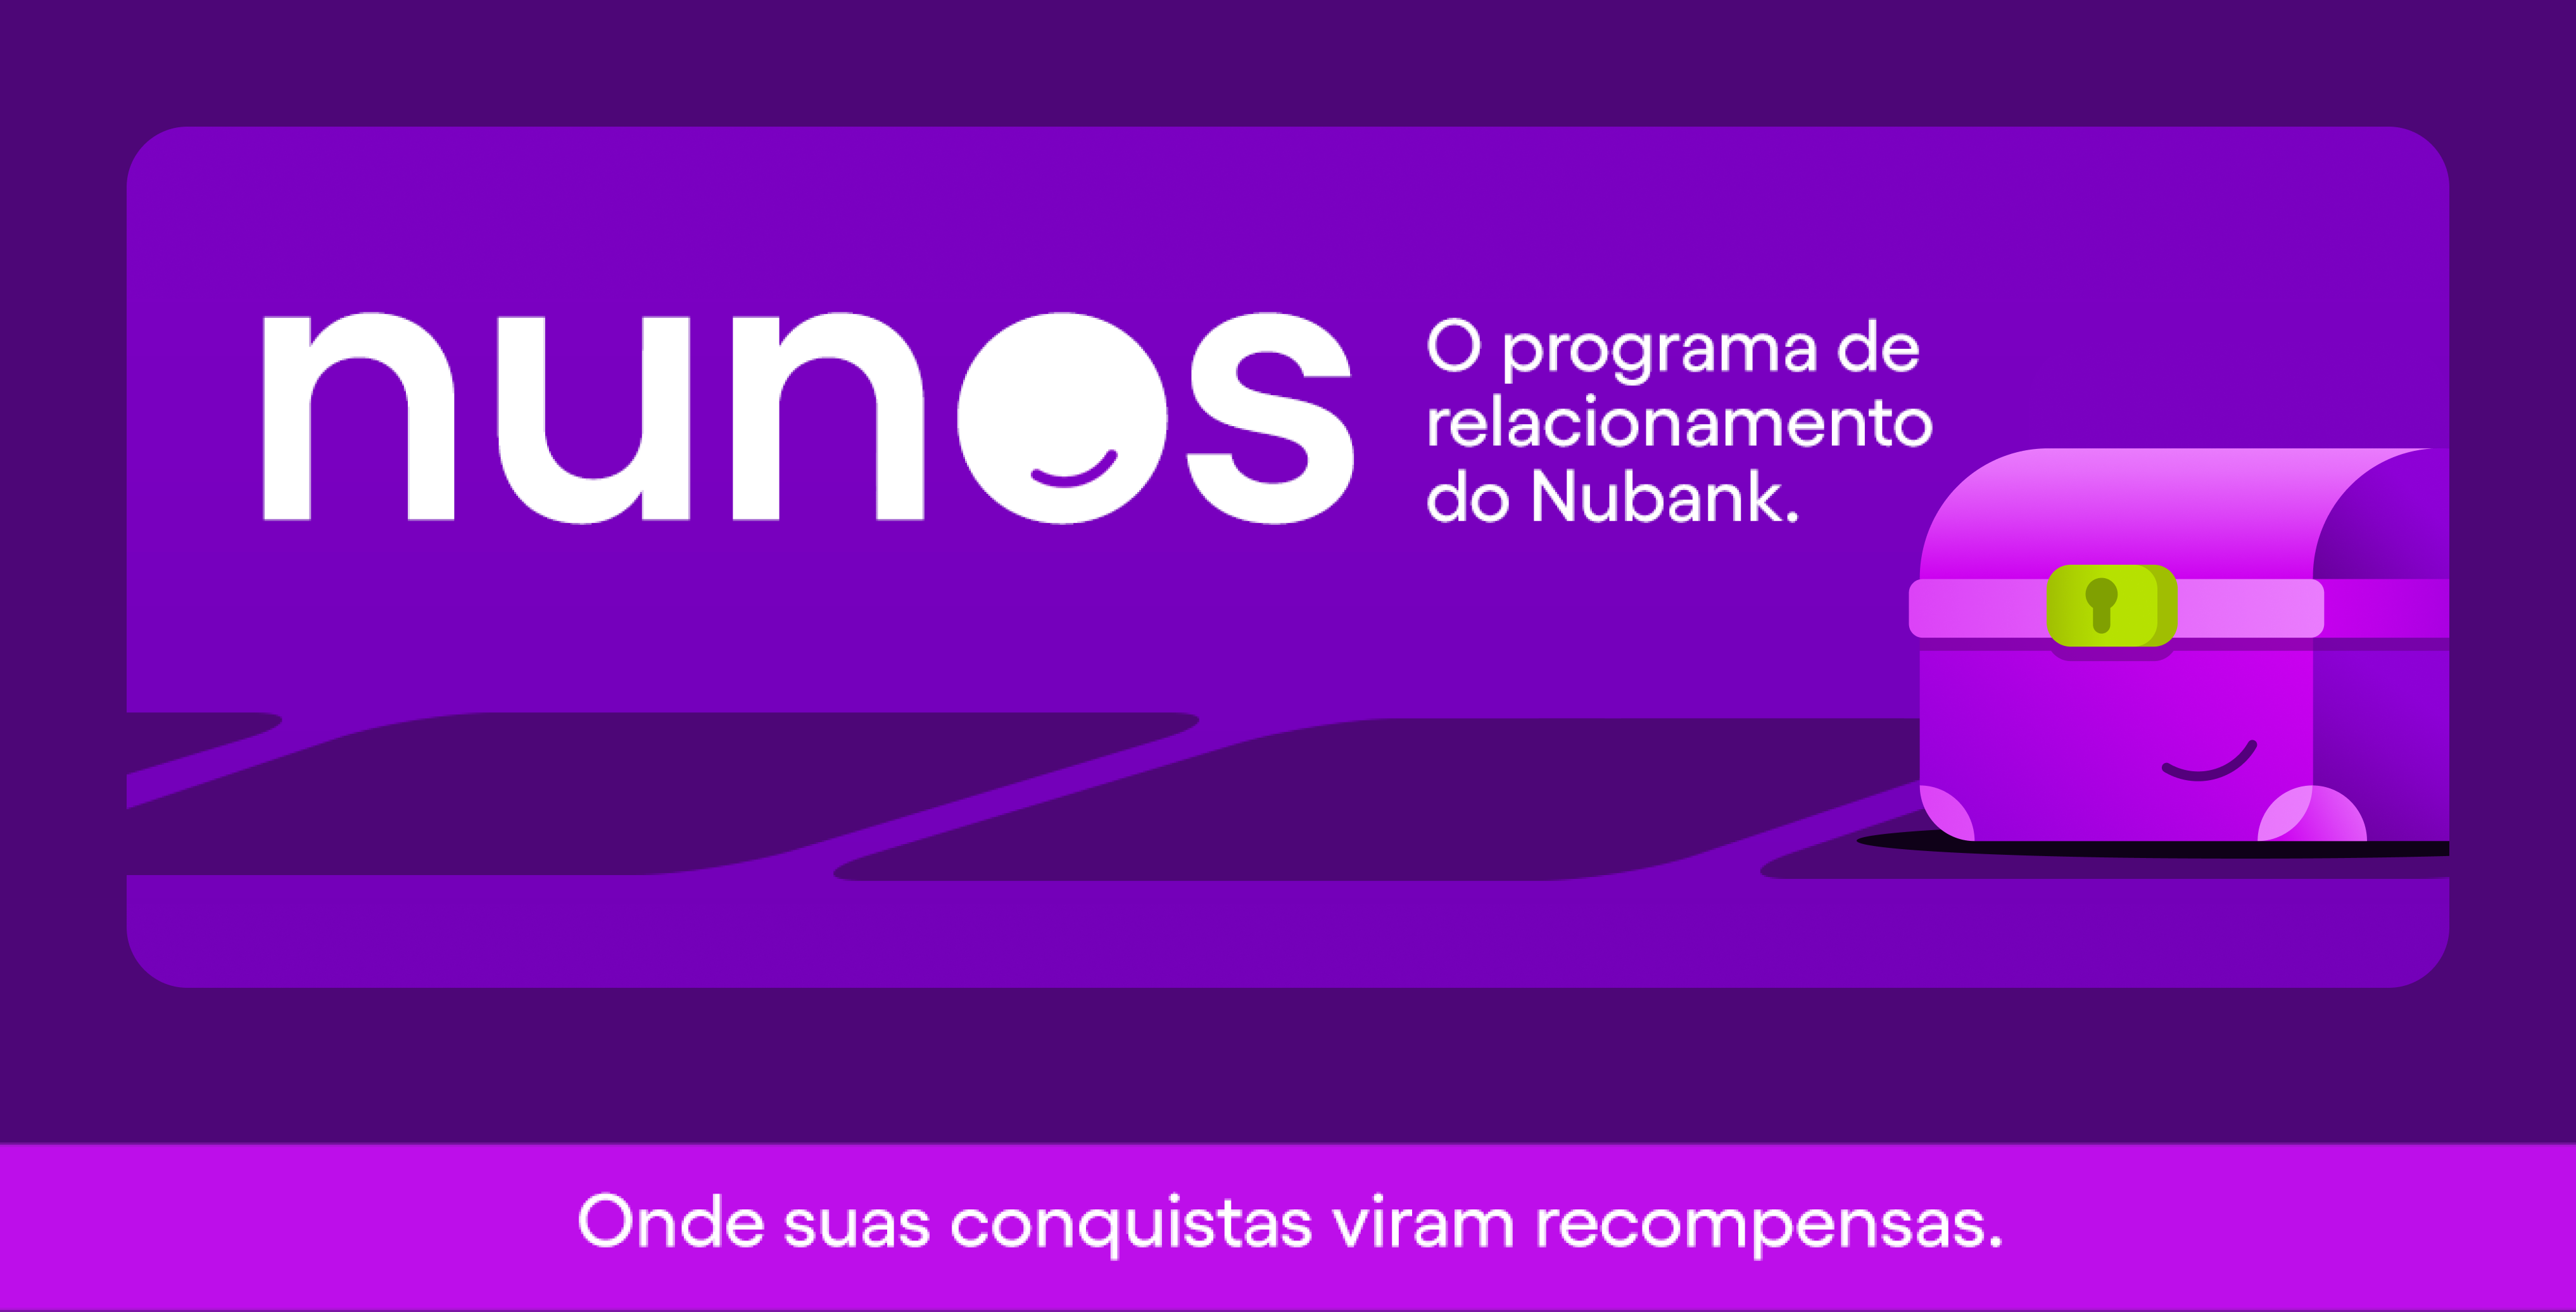 Nunos, programa de relacionamento do Nubank